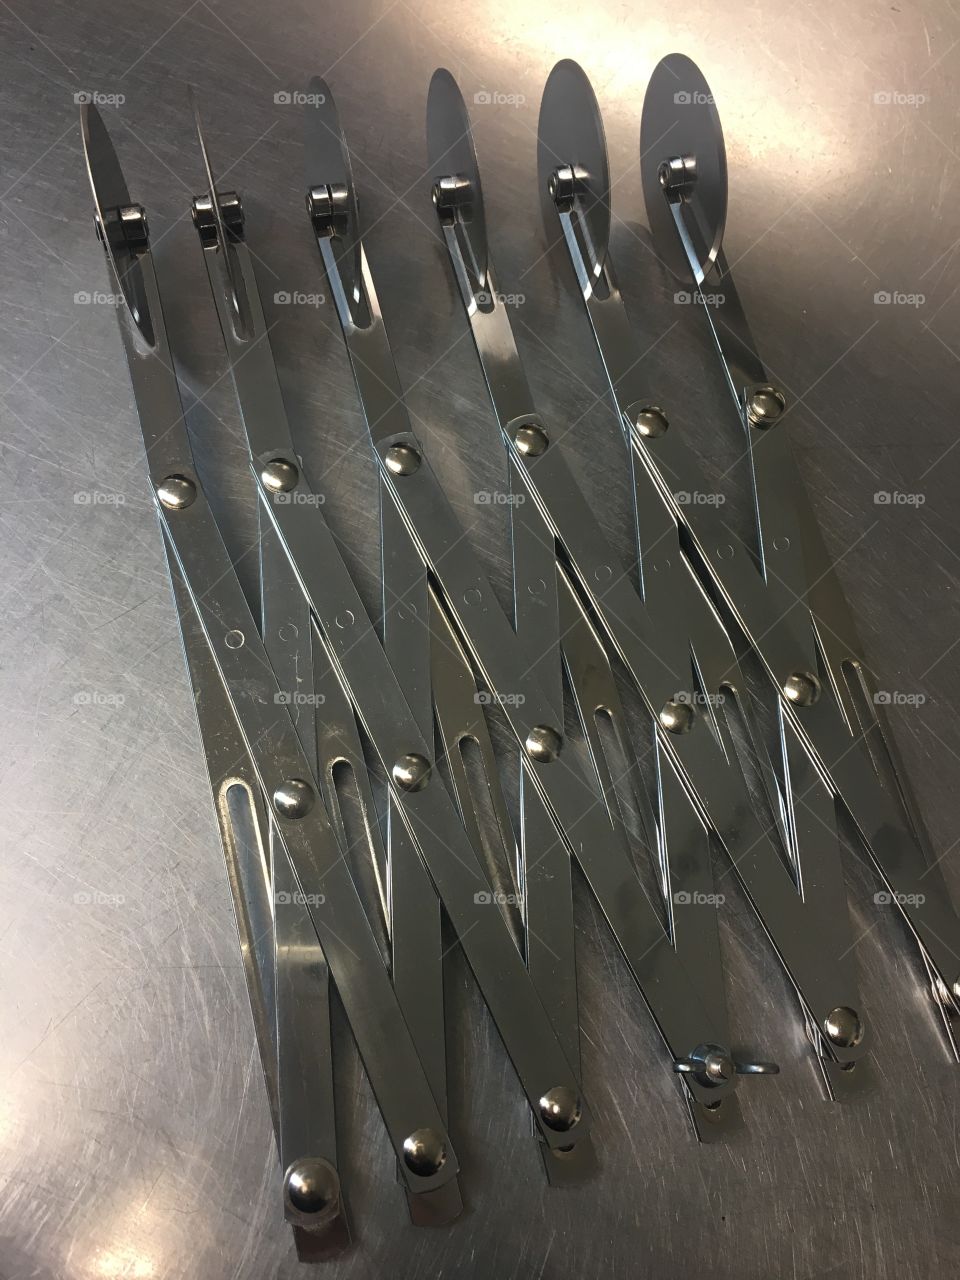 Chef tools